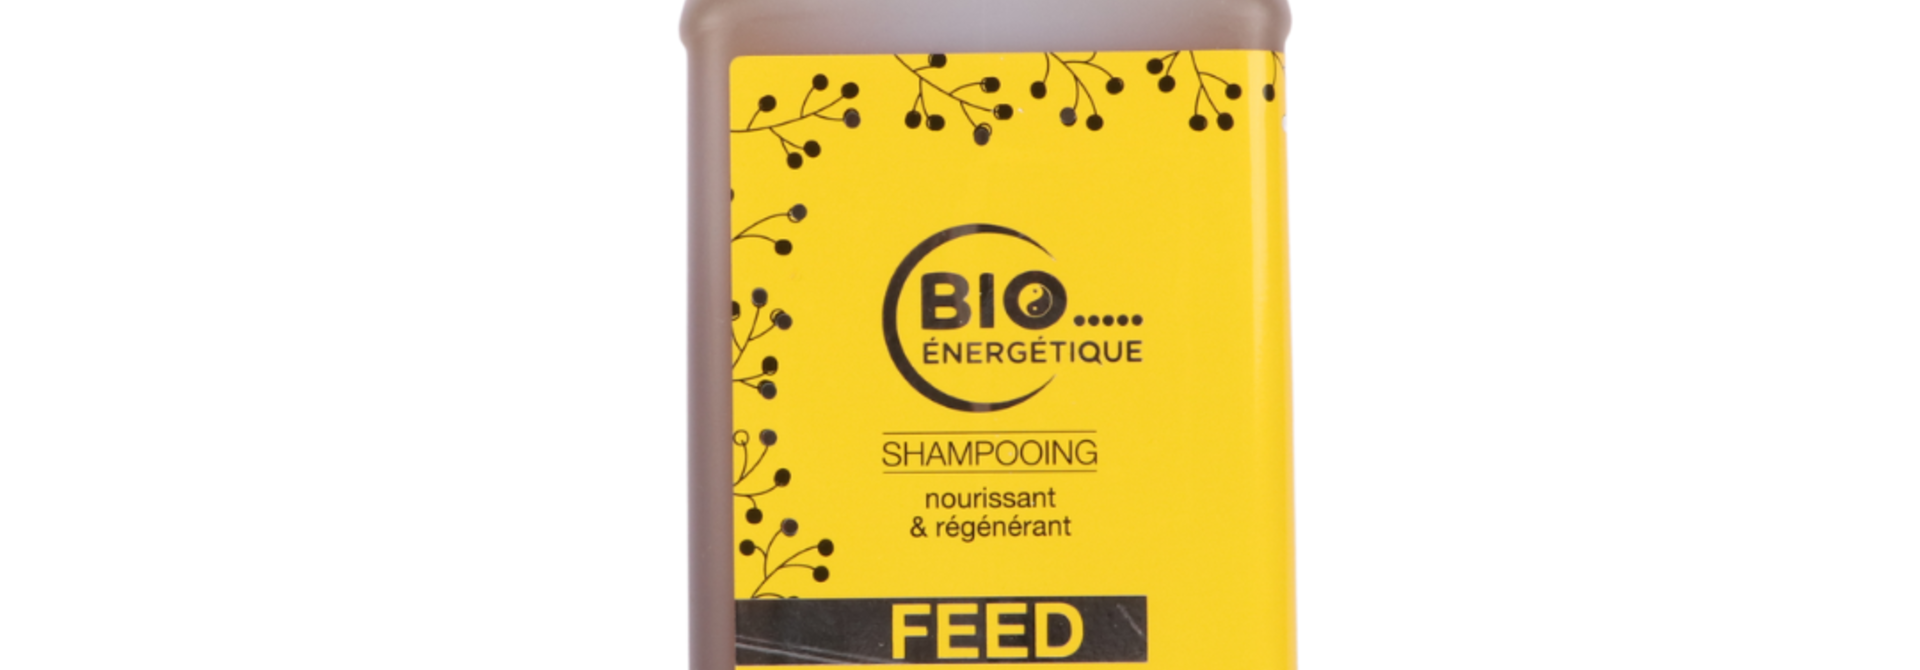 FEED Shampoo / Nourishing & Regenerating